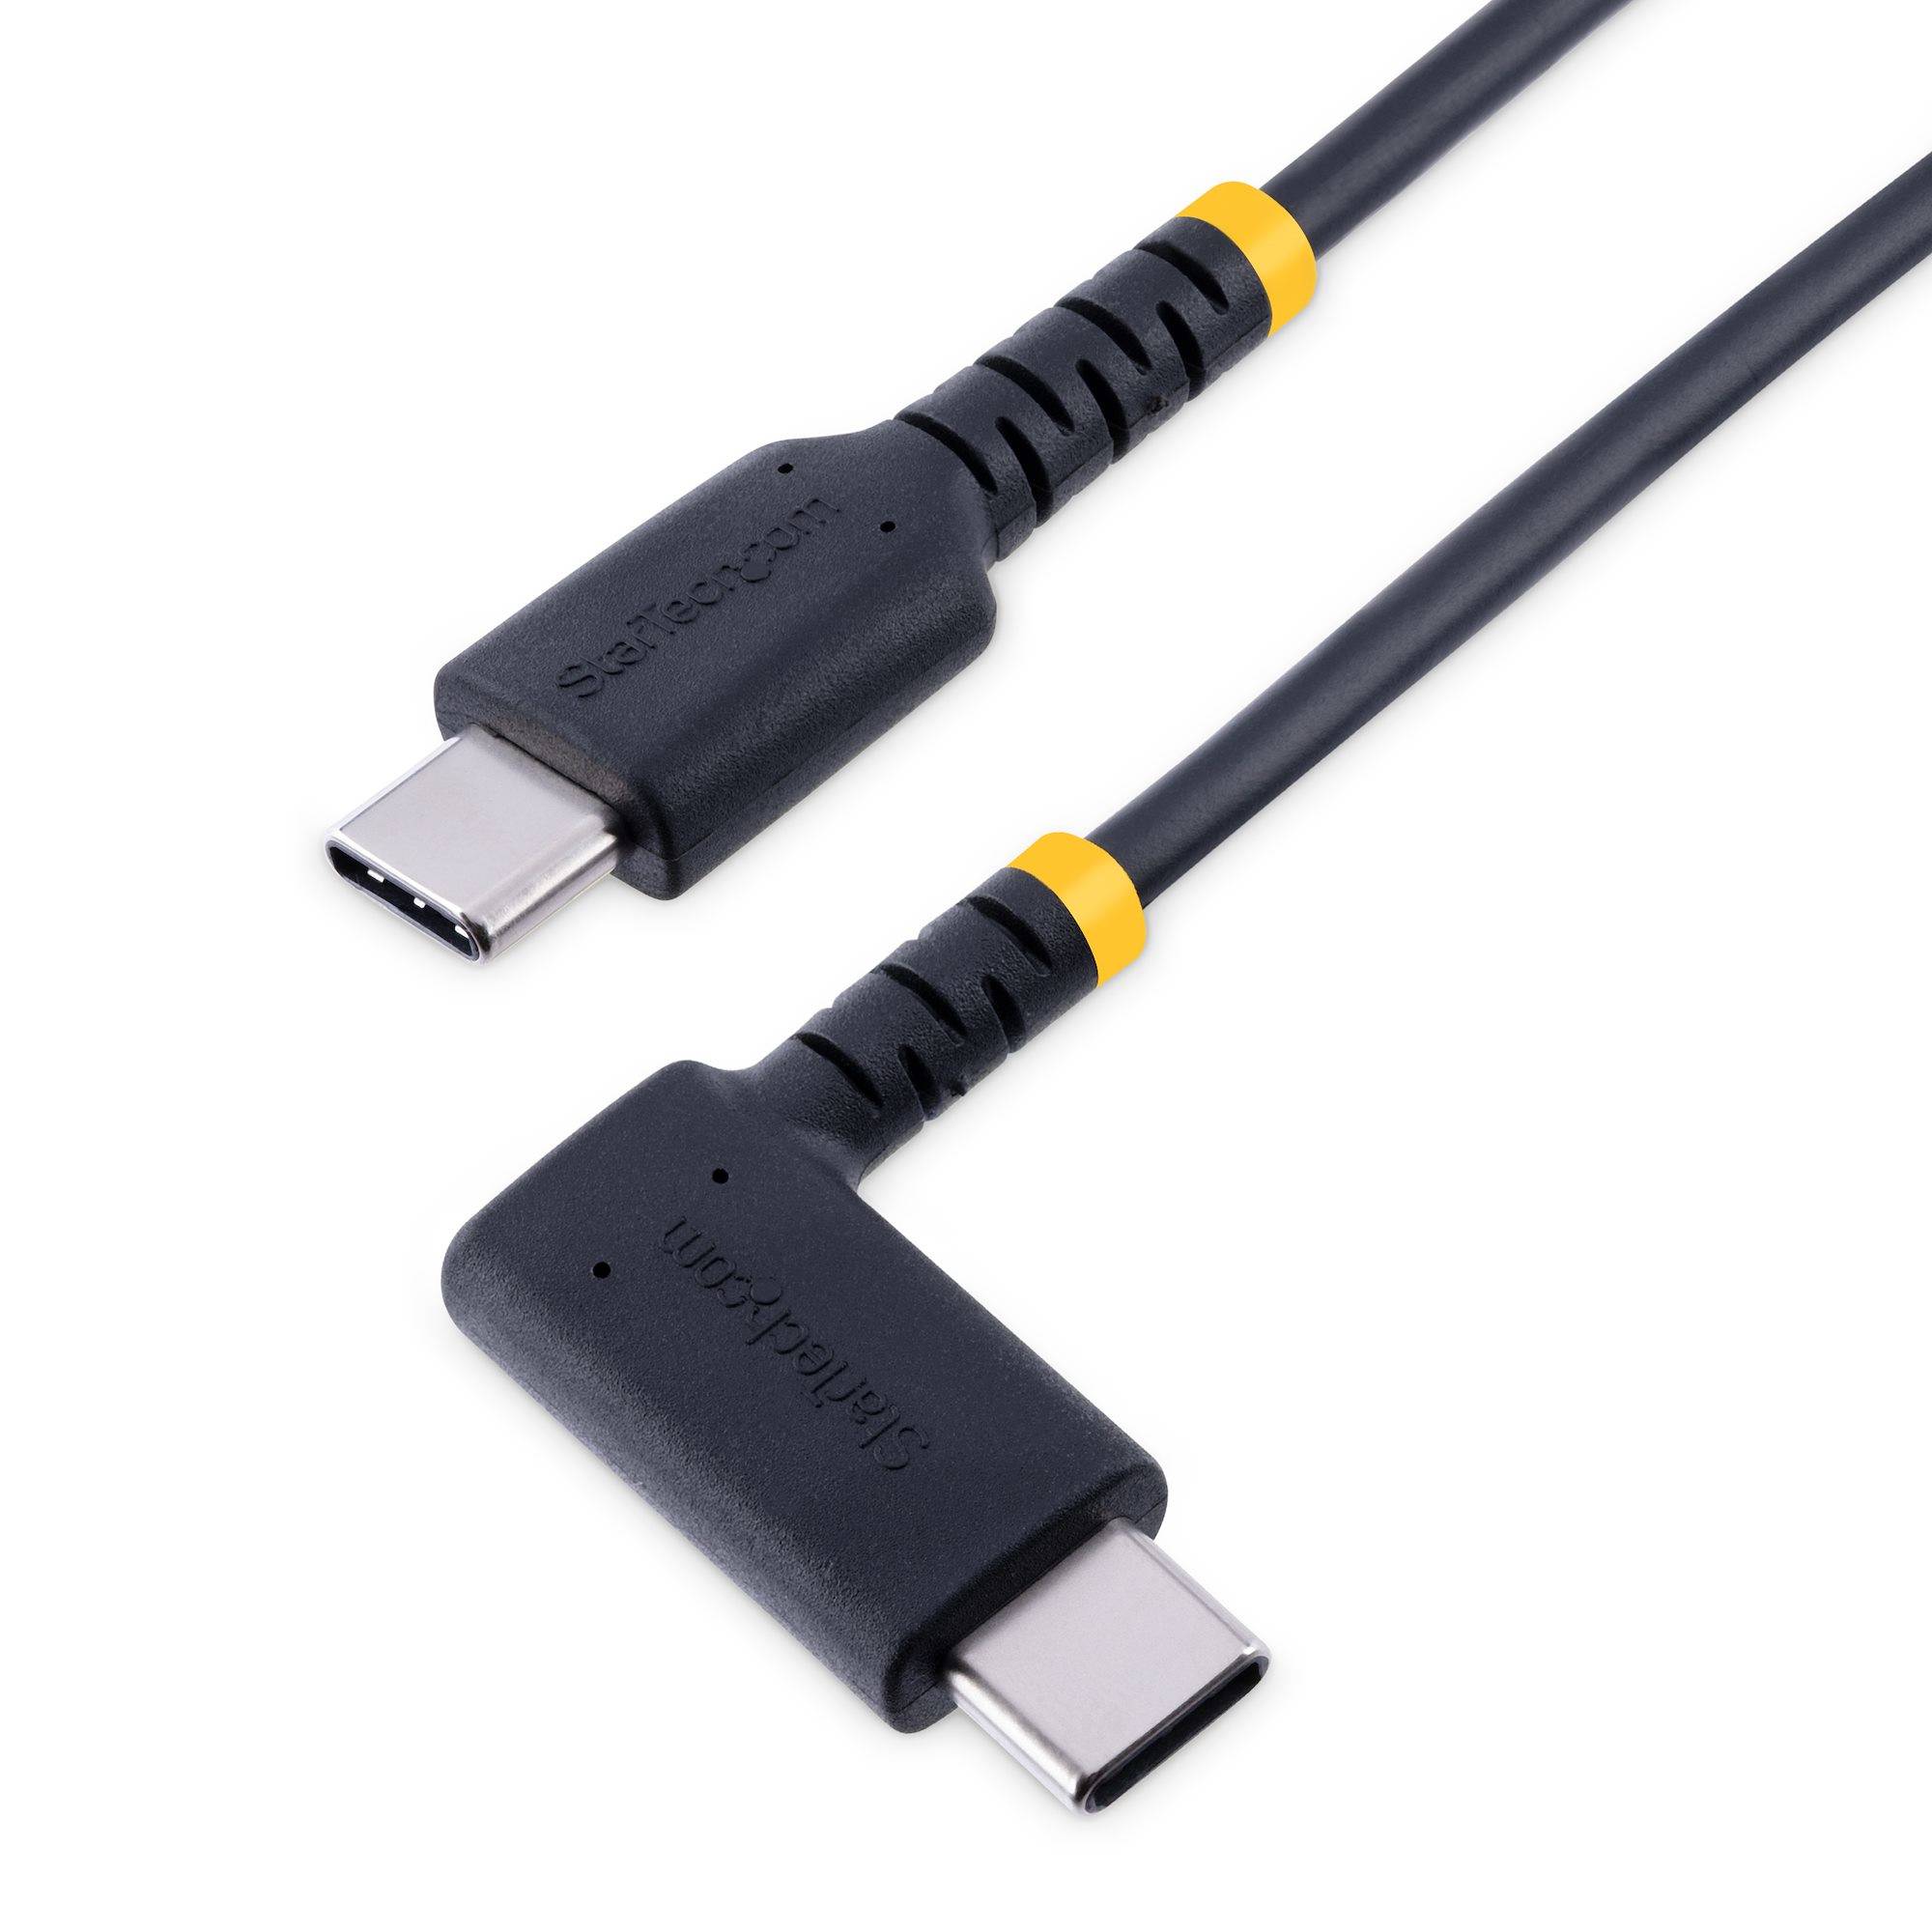 Rca Informatique - Image du produit : 2M USB-C CHARGING CABLE FAST CHARGE - RIGHT ANGLE USBC CABLE